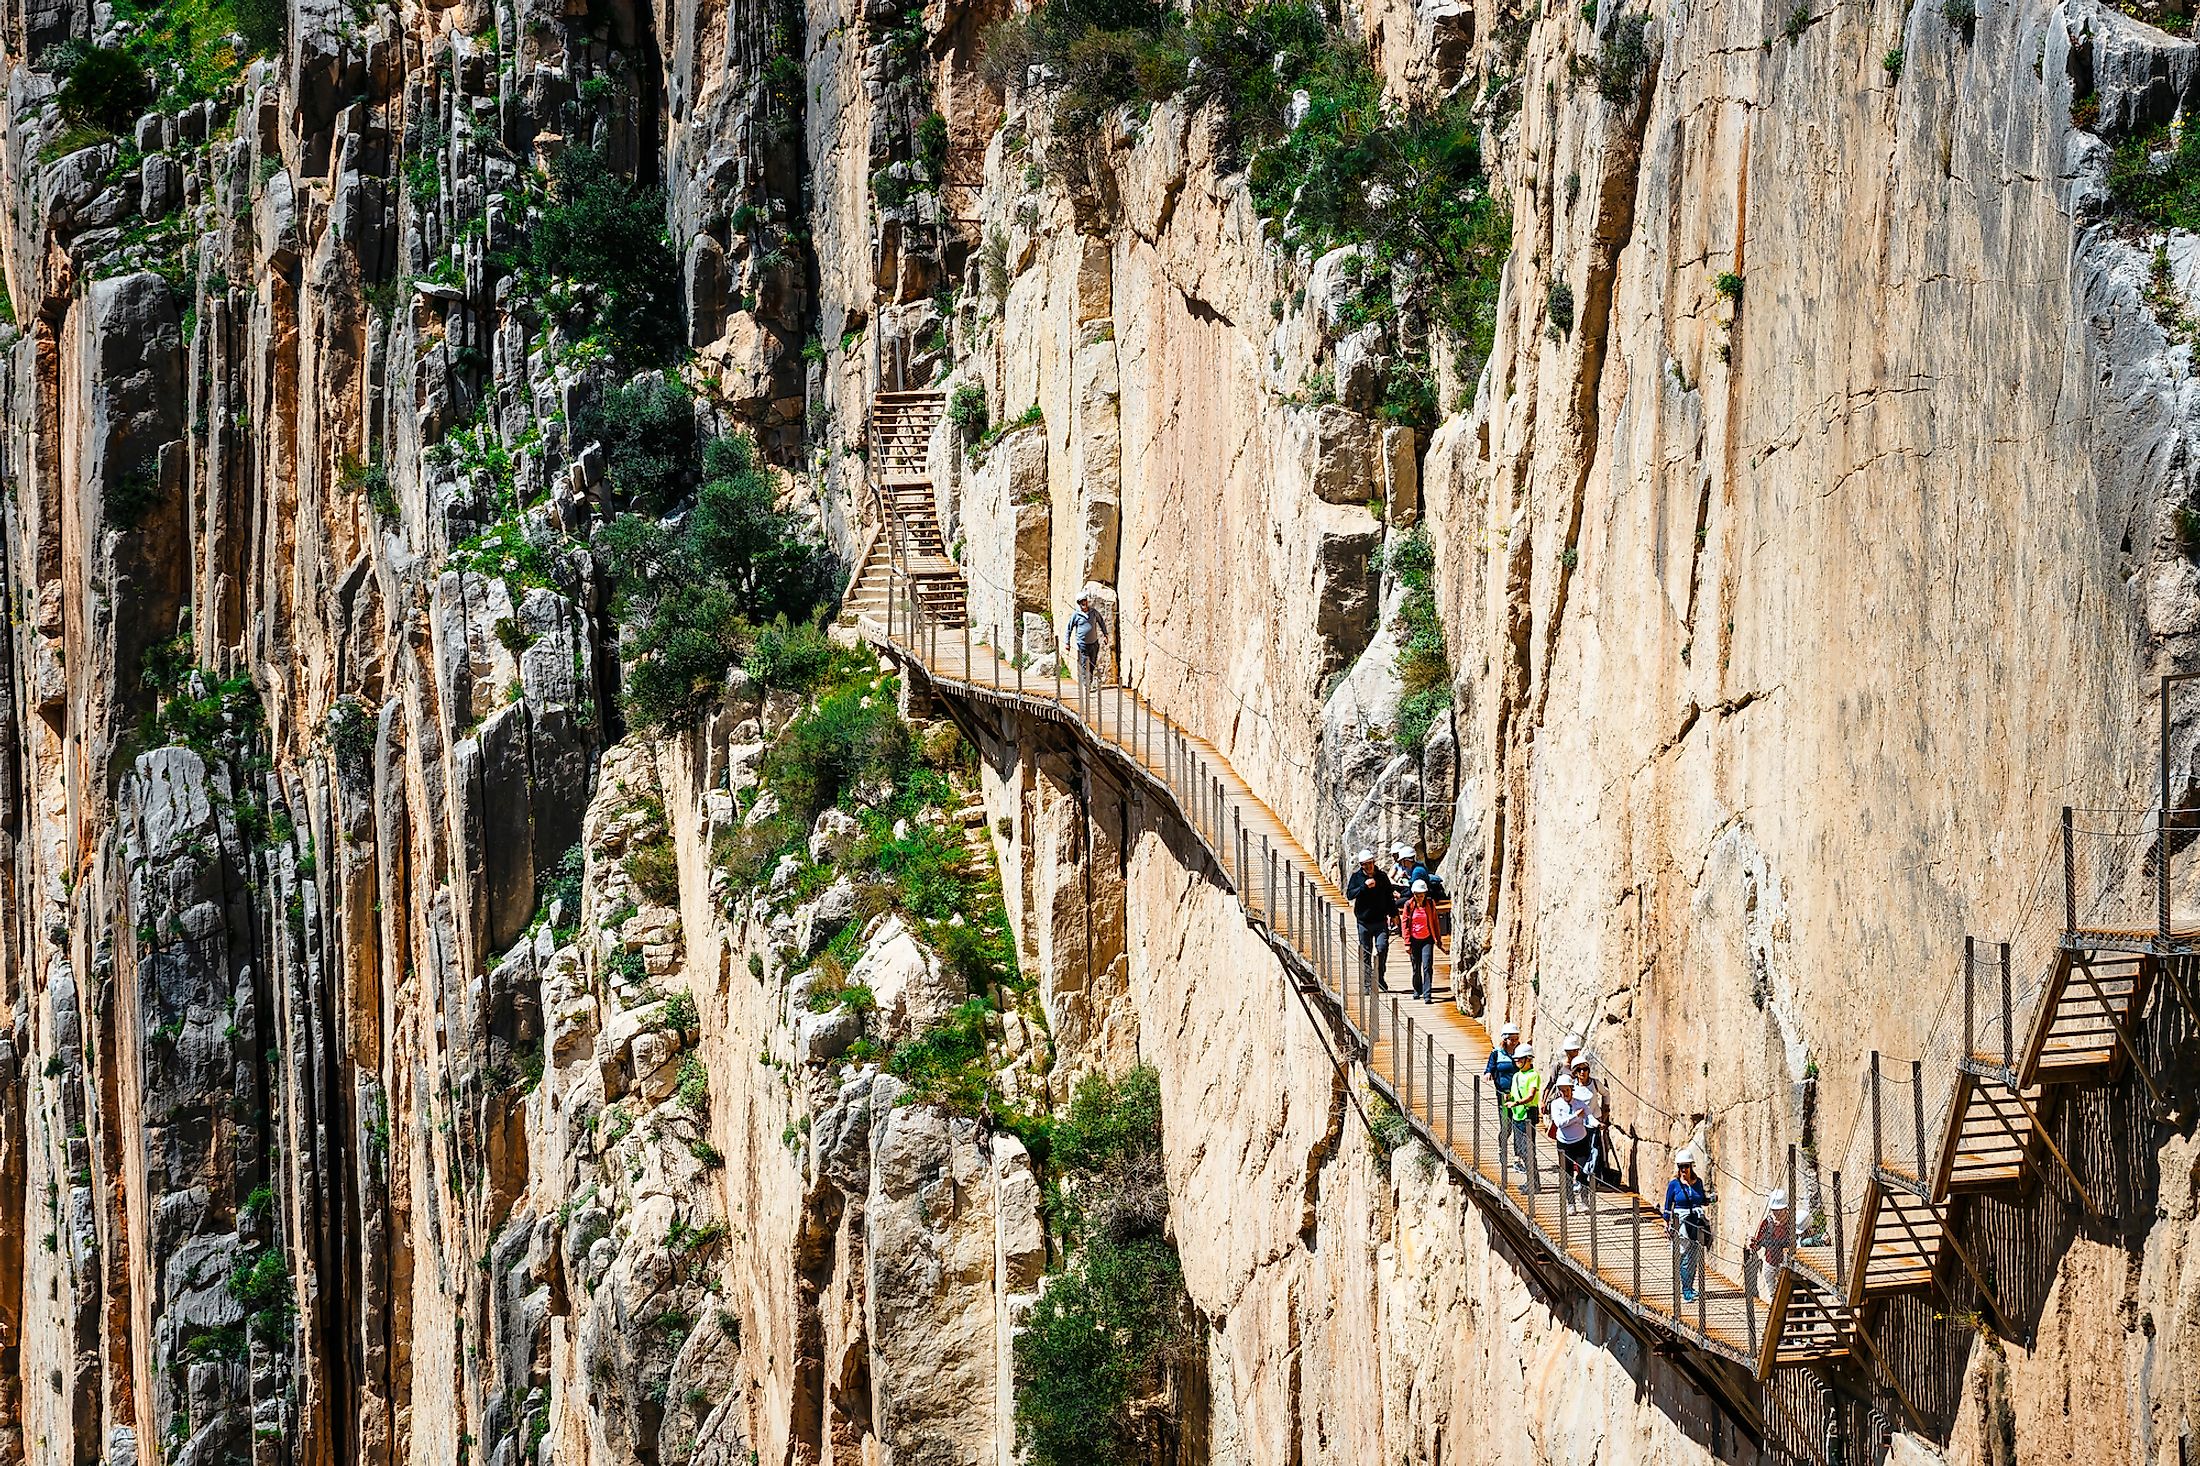 Visitors walking along the World's most dangerous footpath. Editorial credit: Dziewul / Shutterstock.com